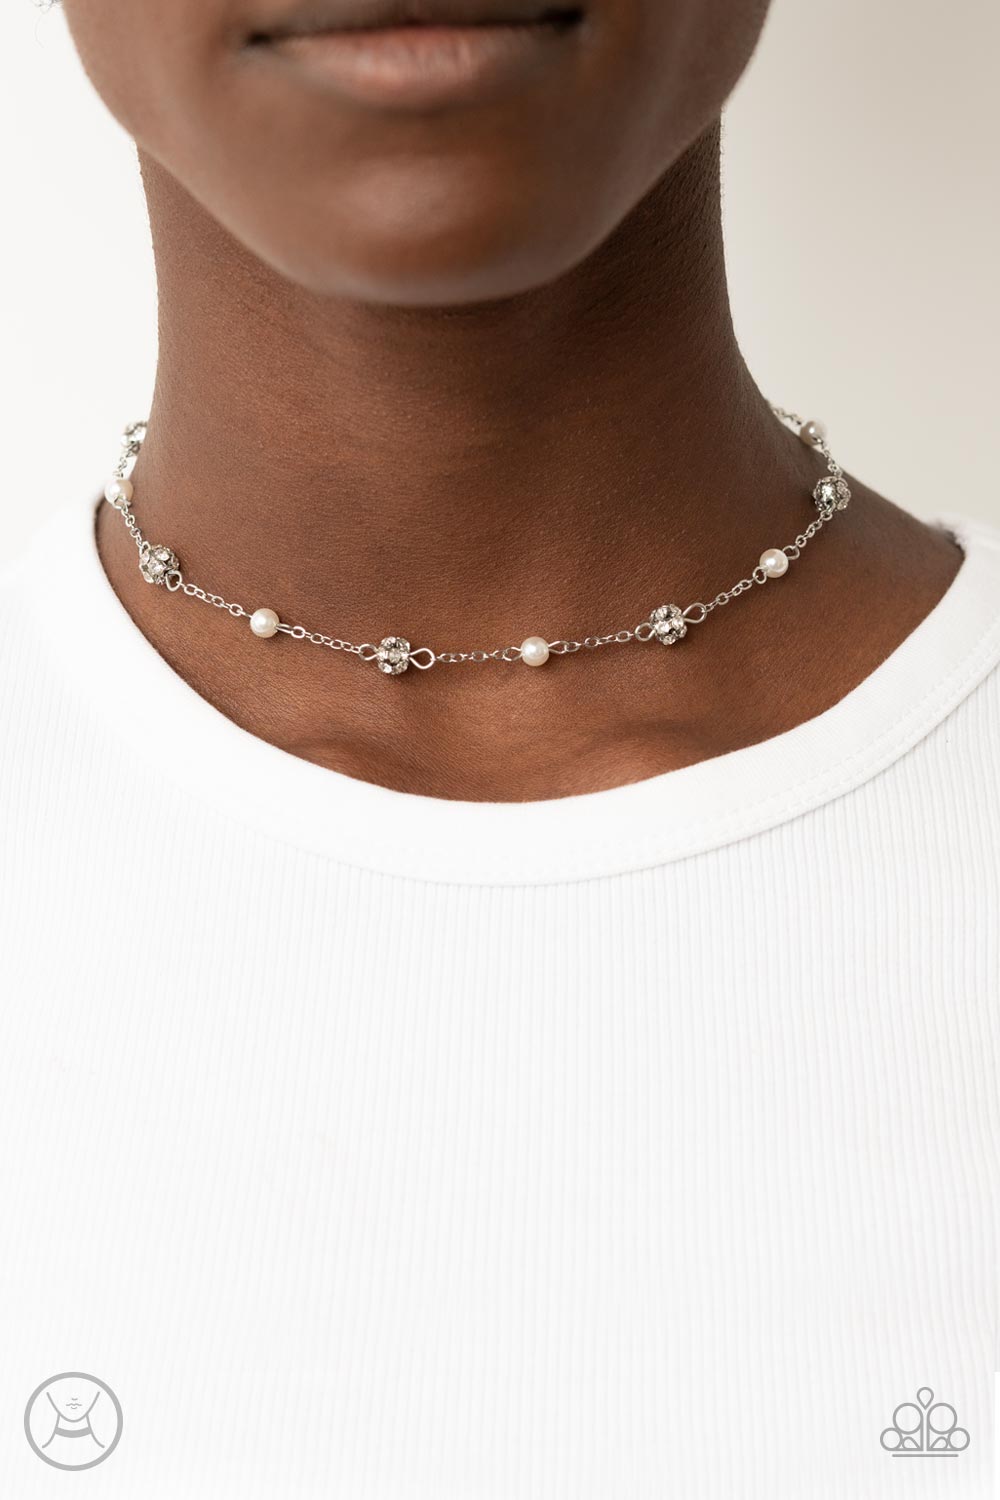 Rumored Romance White Pearl & Rhinestone Choker Necklace - Paparazzi Accessories- lightbox - CarasShop.com - $5 Jewelry by Cara Jewels